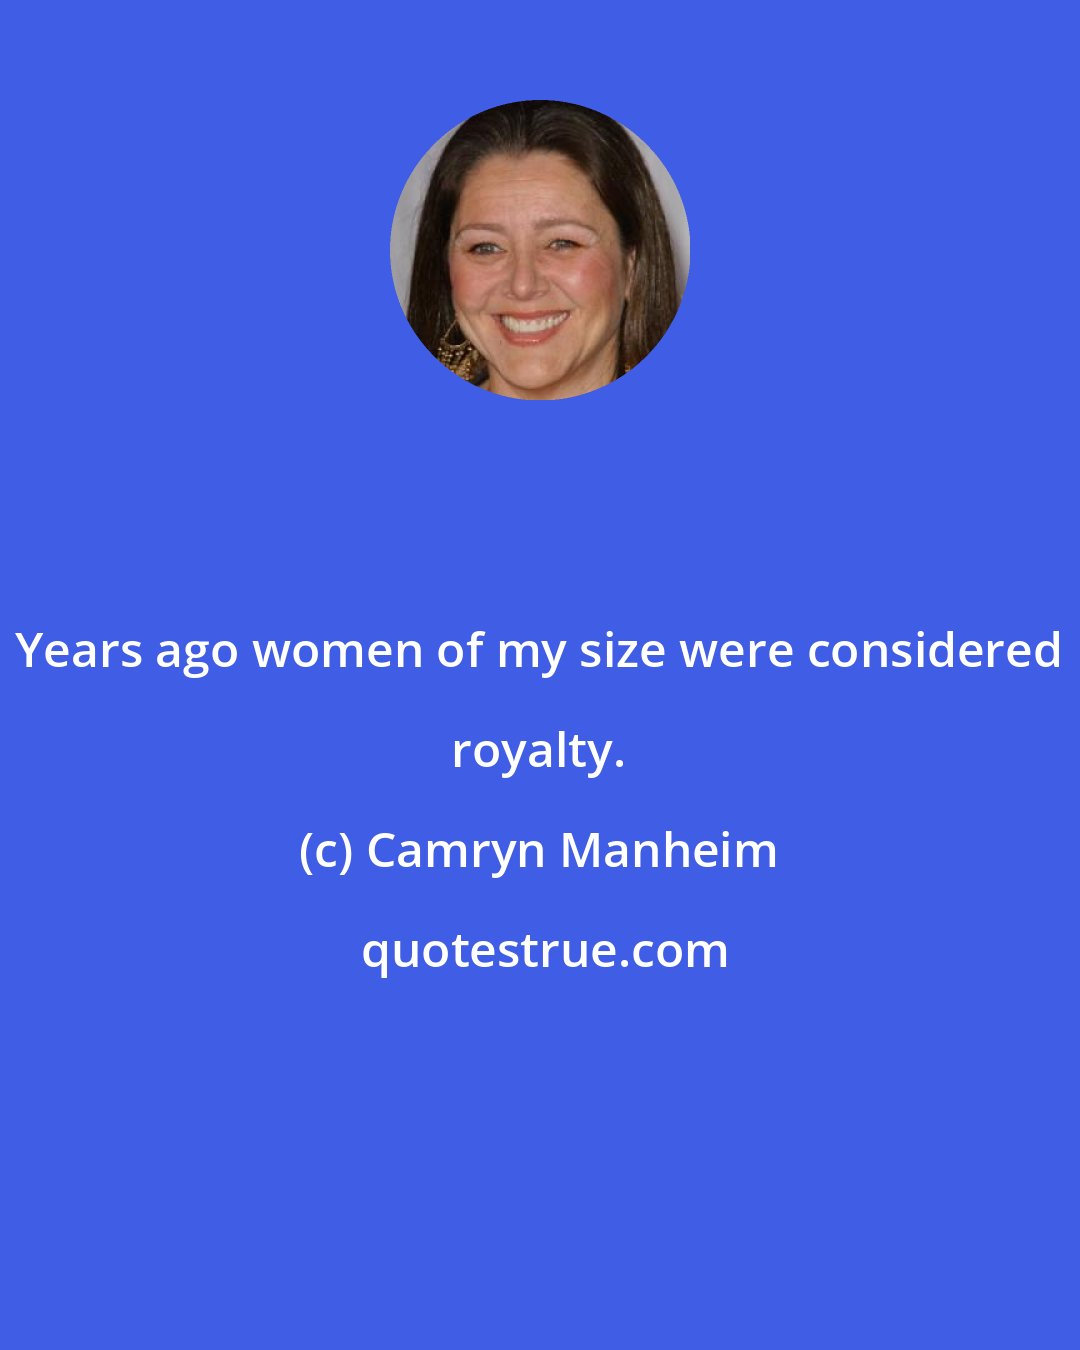 Camryn Manheim: Years ago women of my size were considered royalty.